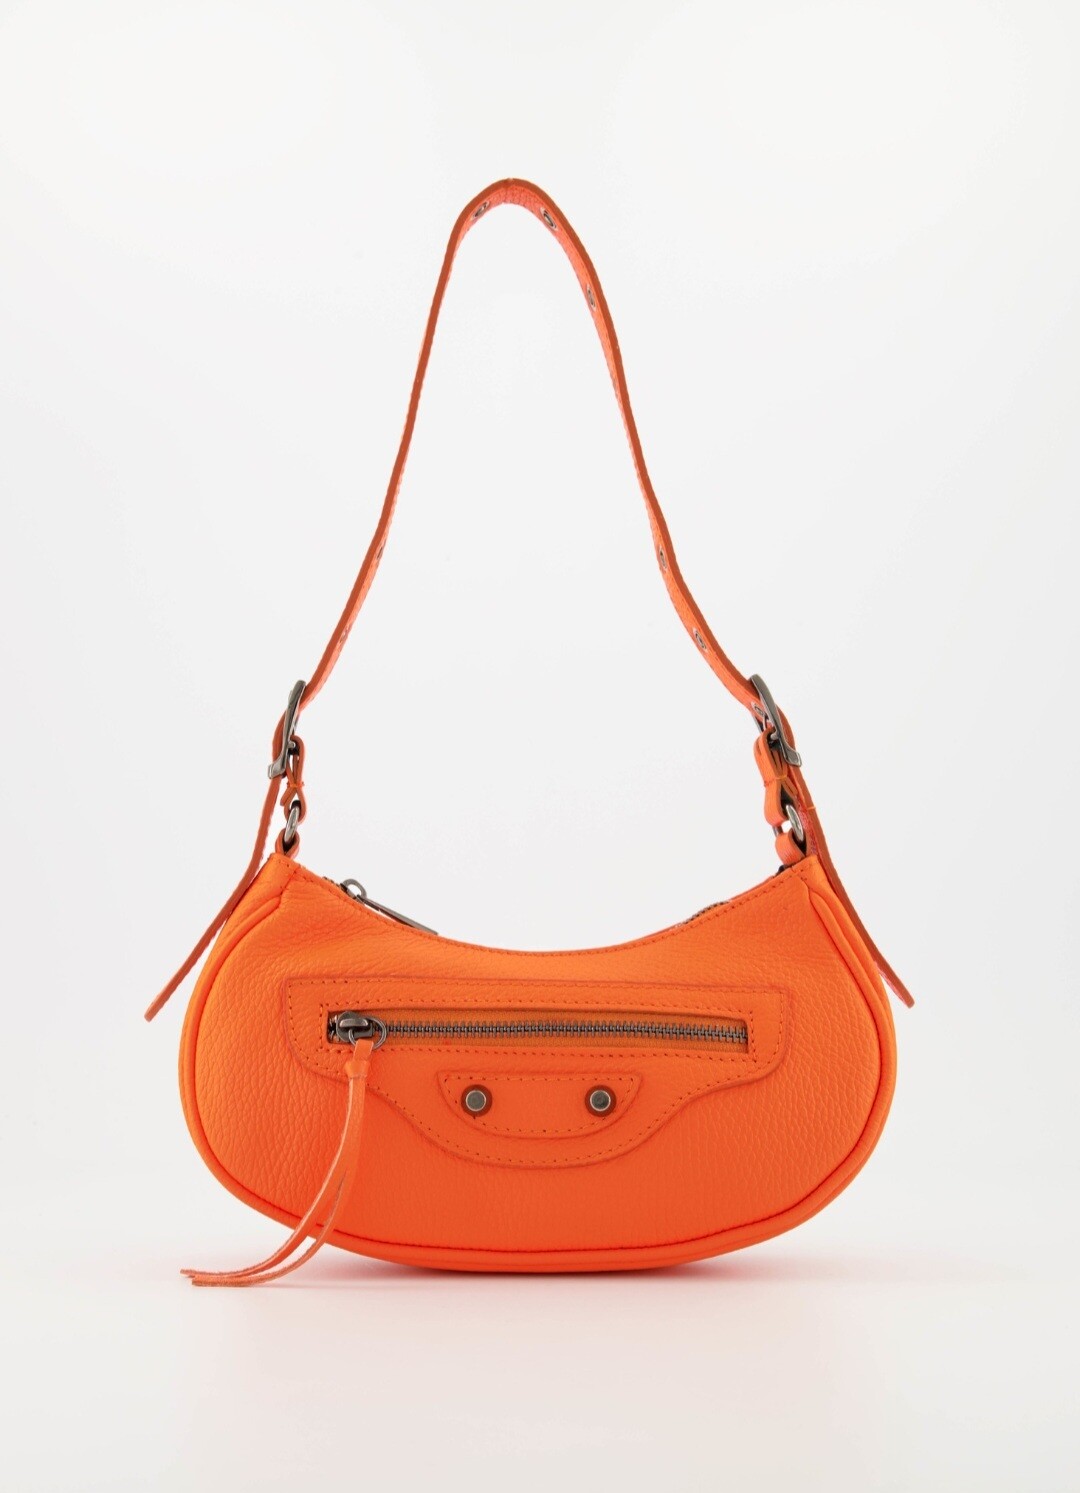 Orange Genuine leather bag